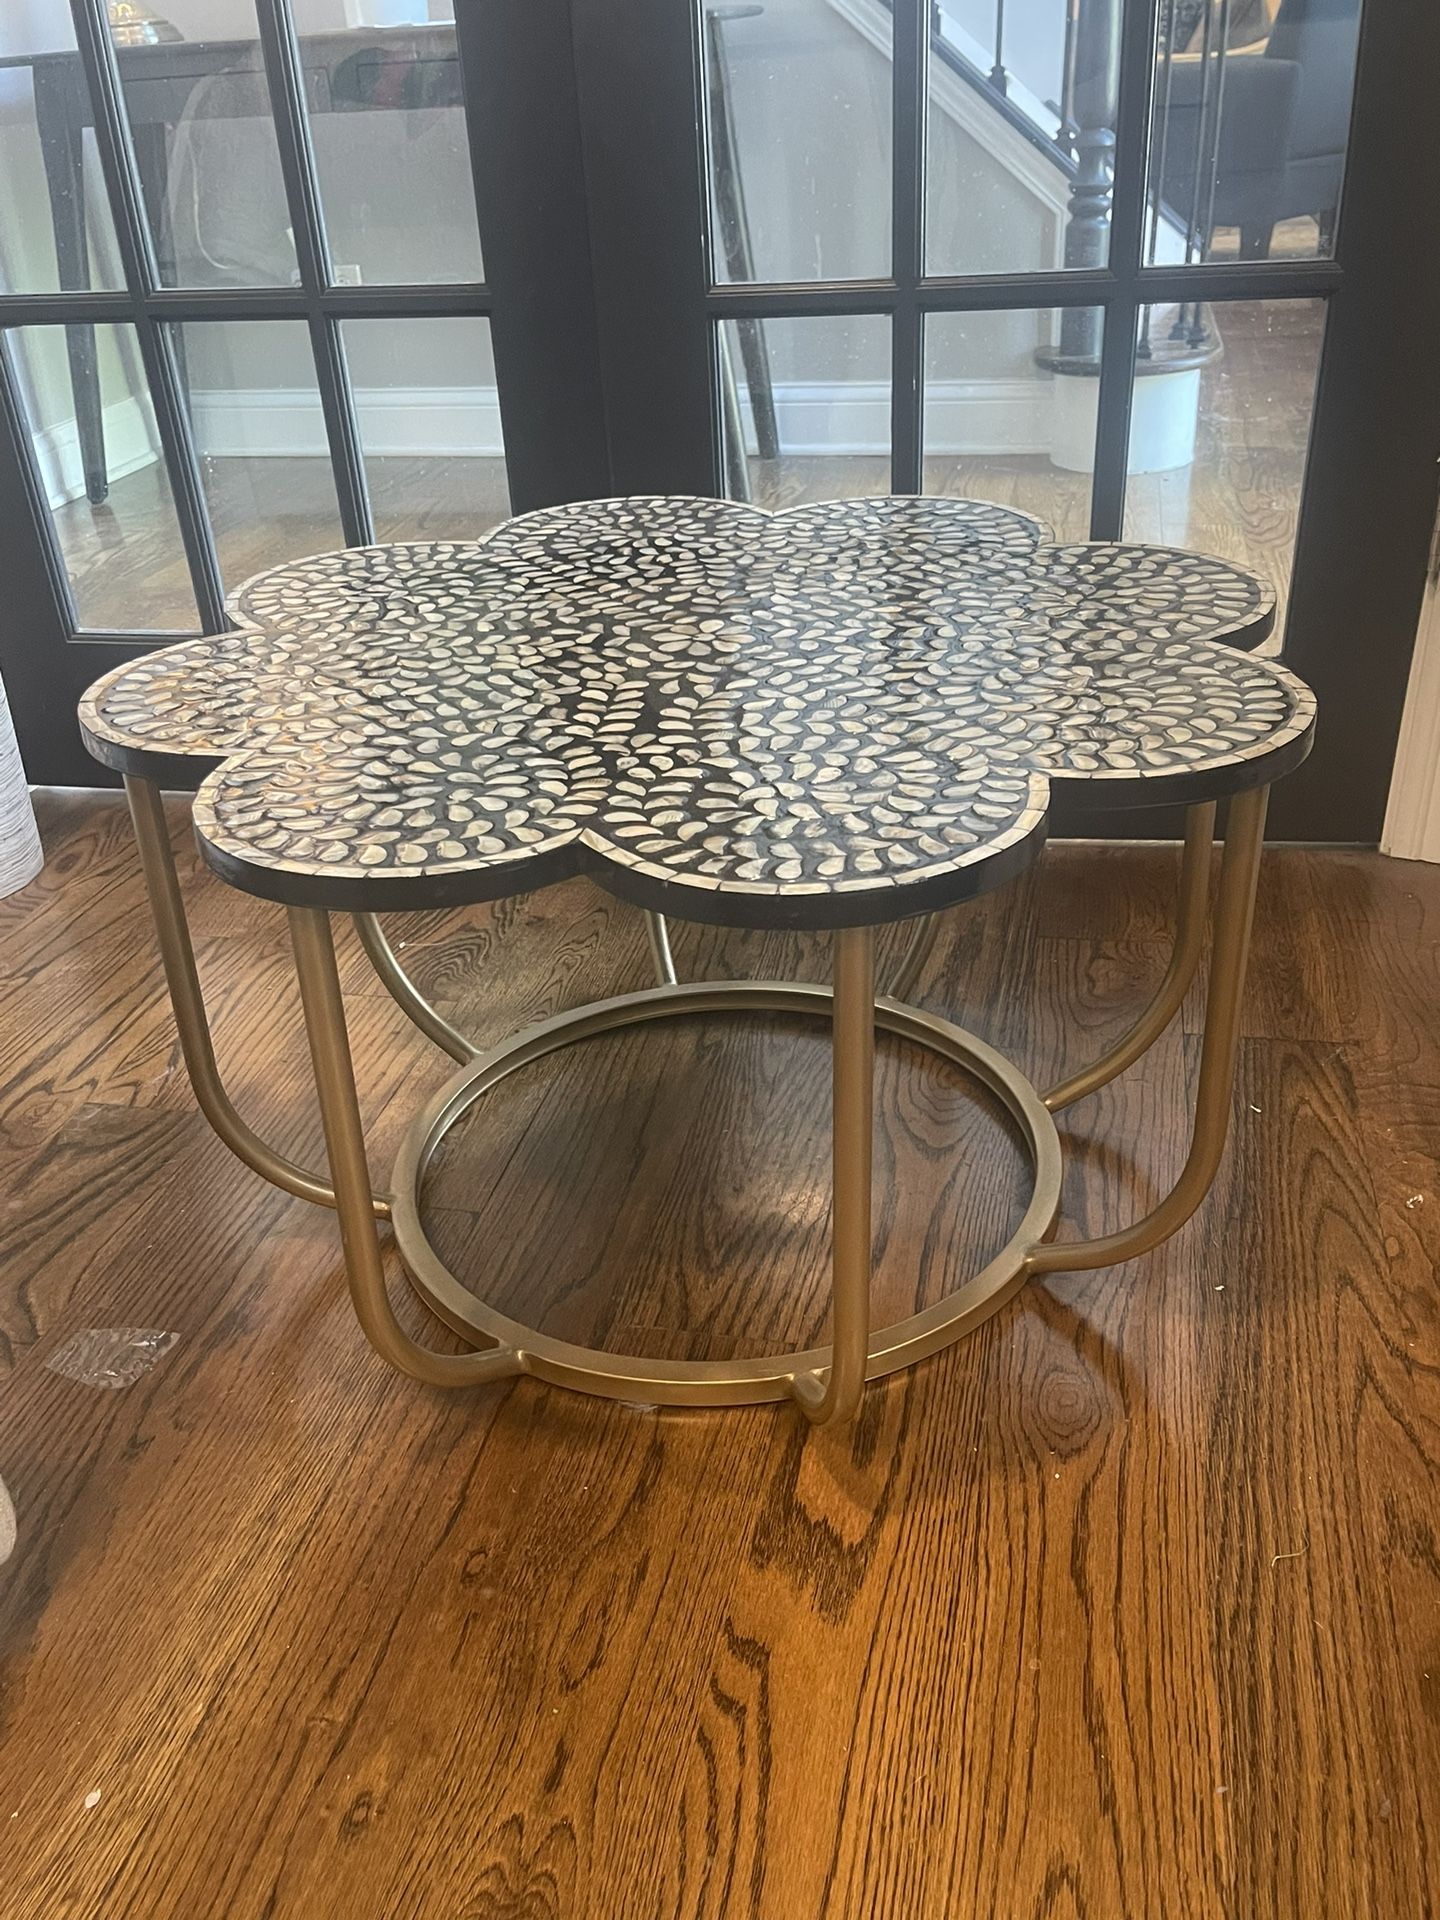 Decorative Coffee table